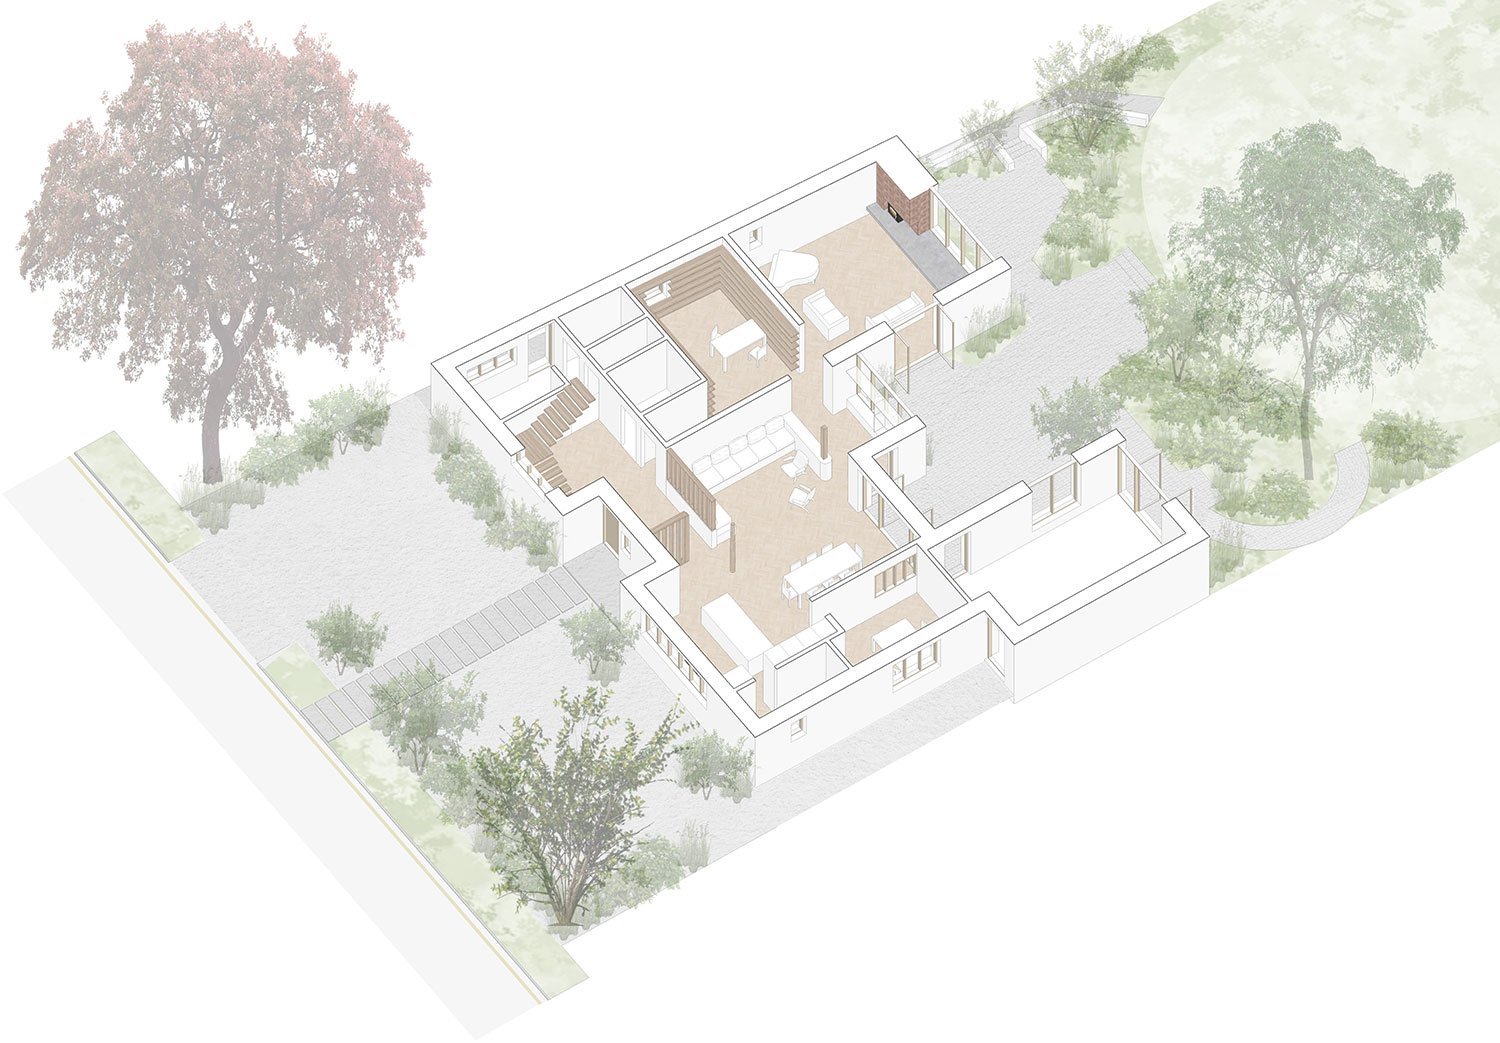 Cambridge-House-Retrofit-Passivhaus-landscape-drawing-prewett-bizley-architects.jpg